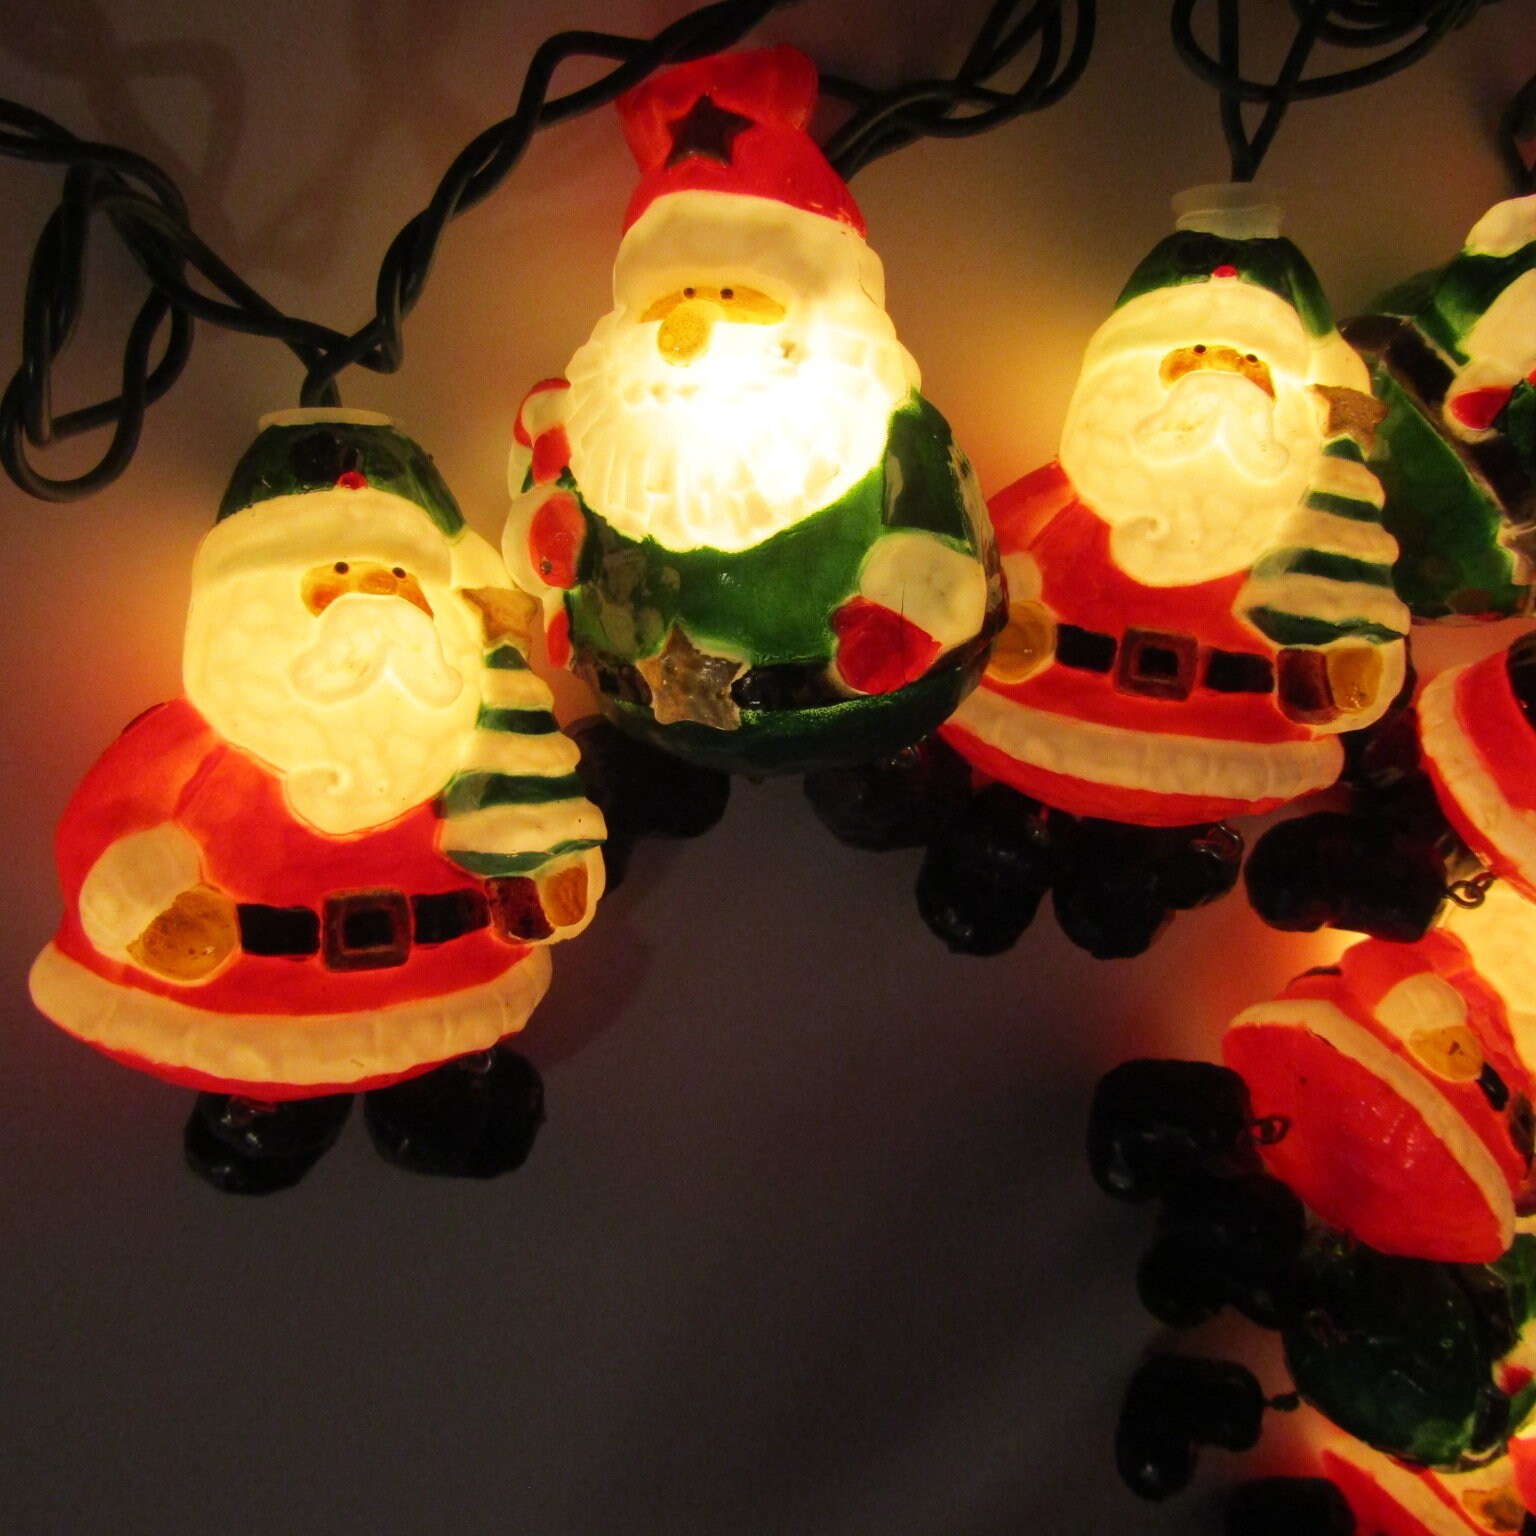 Christmas Snowman Decor Dolls, Indoor Home Decoration Xmas Party Gift  (Santa), 1 - Kroger